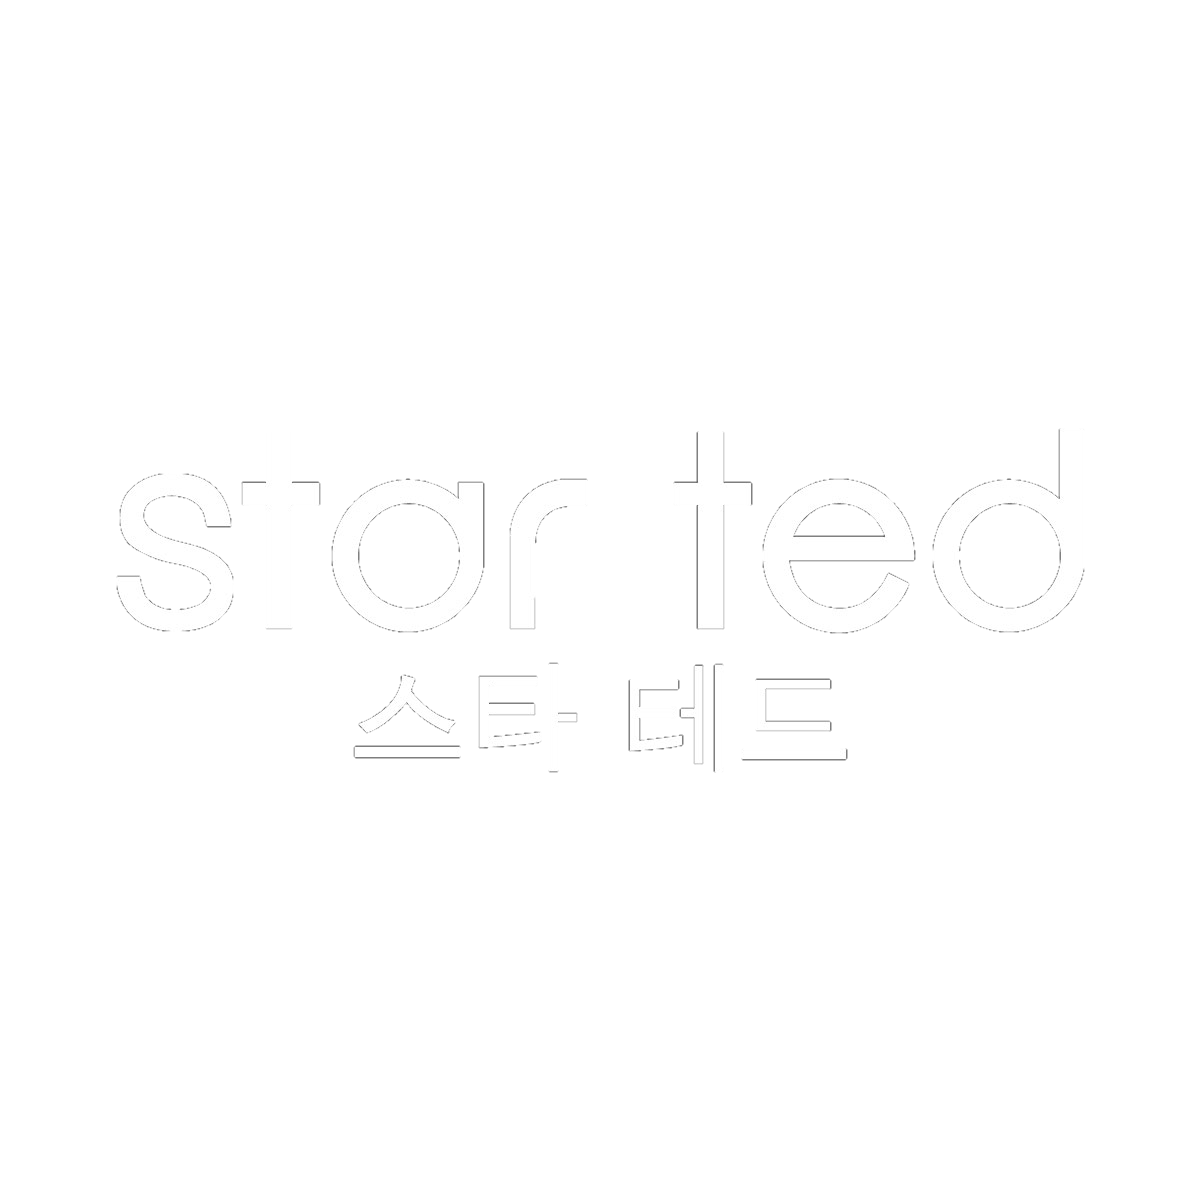 Star Ted (M) Sdn Bhd